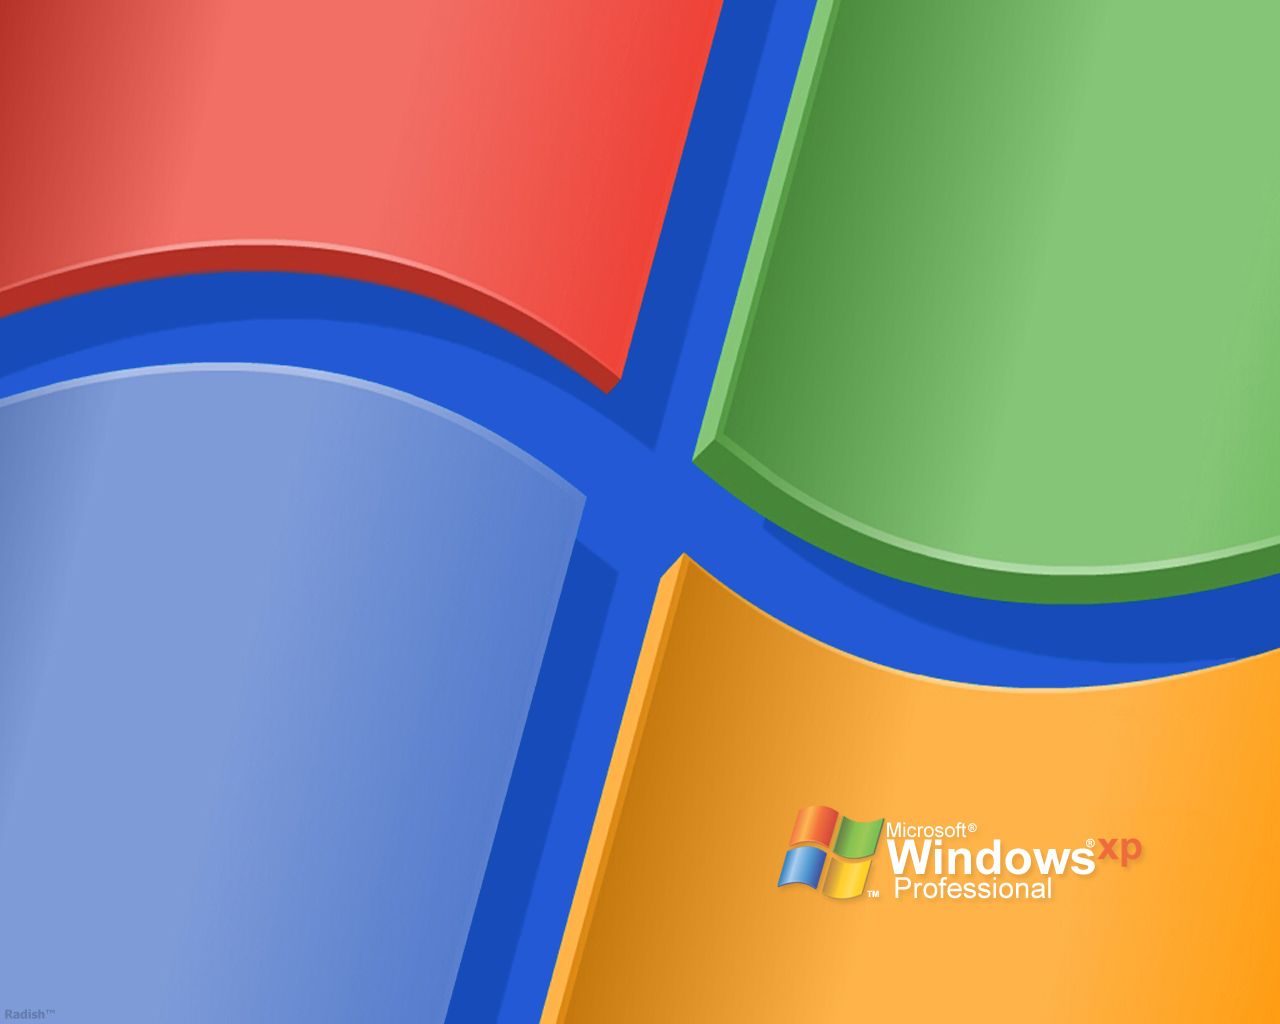 Microsoft Windows Xp Professional Wallpaper | Free Best Hd Wallpapers